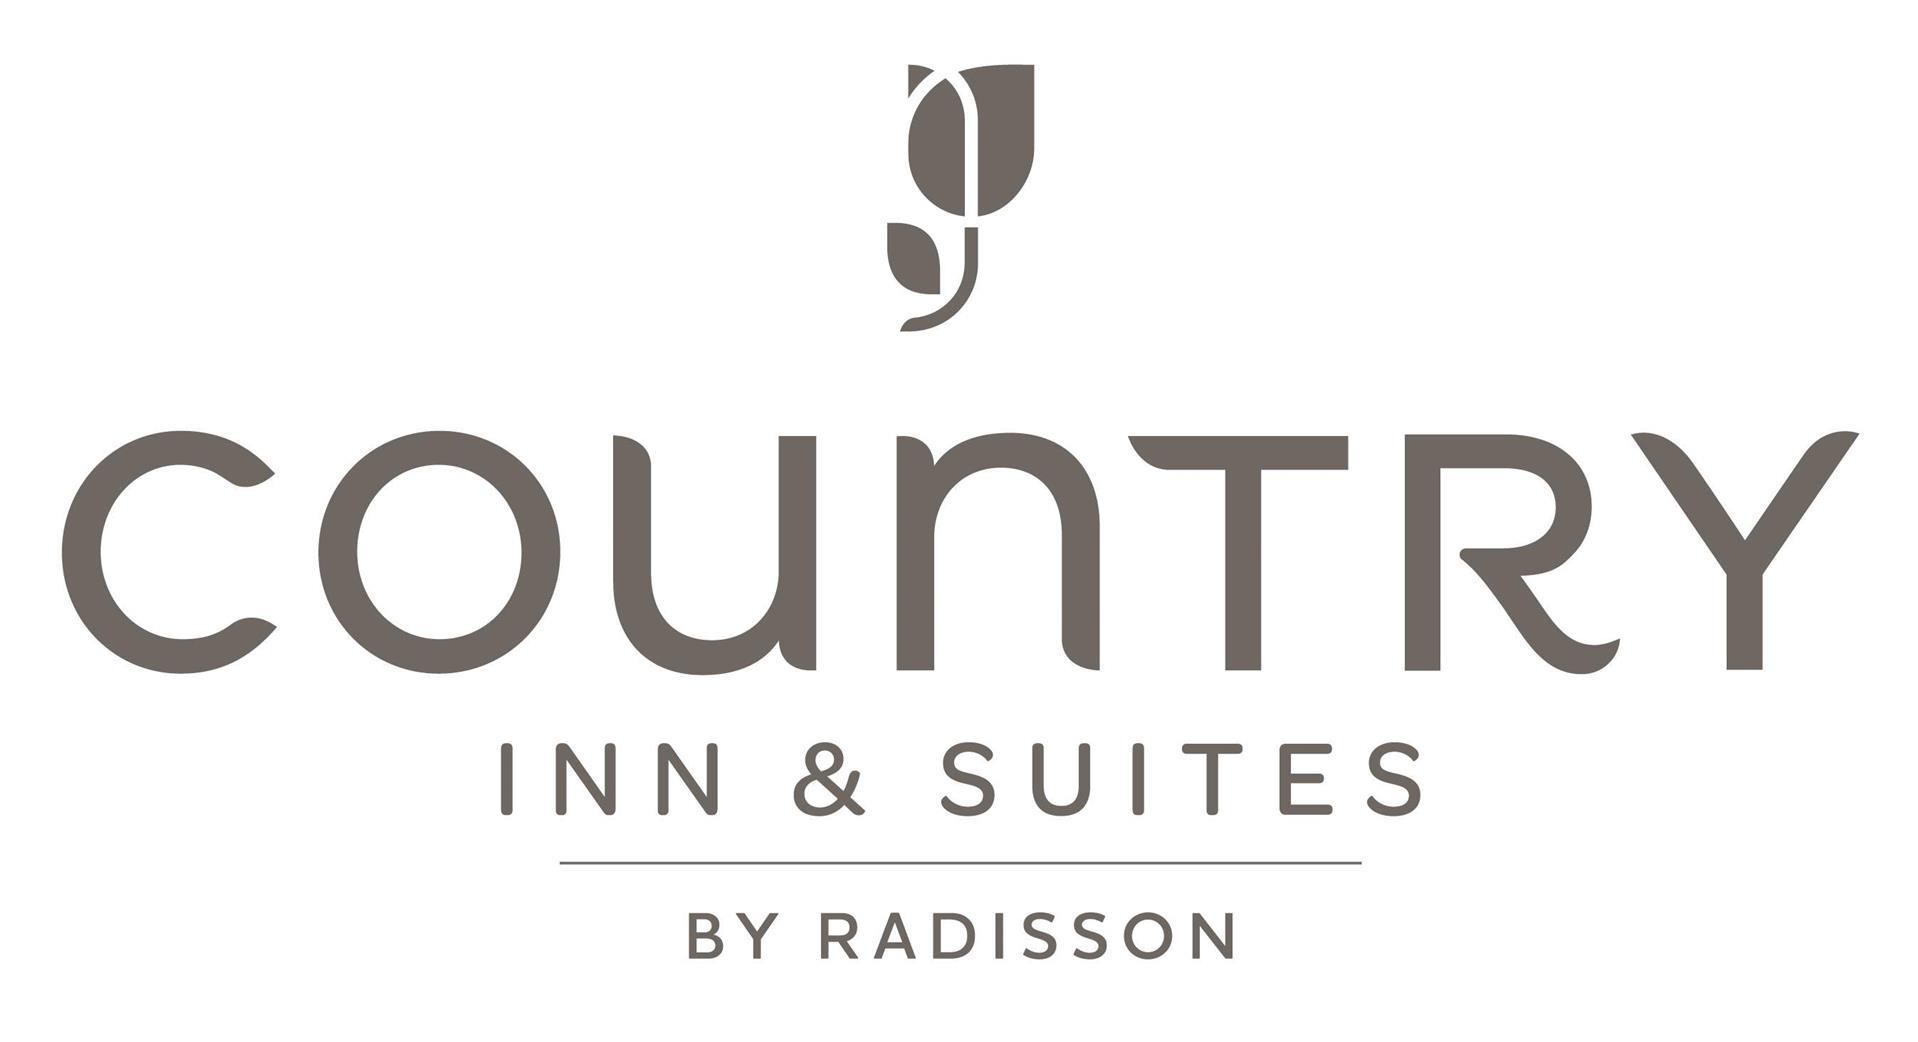 Country Inn & Suites by Radisson - Cumming in Cumming, GA